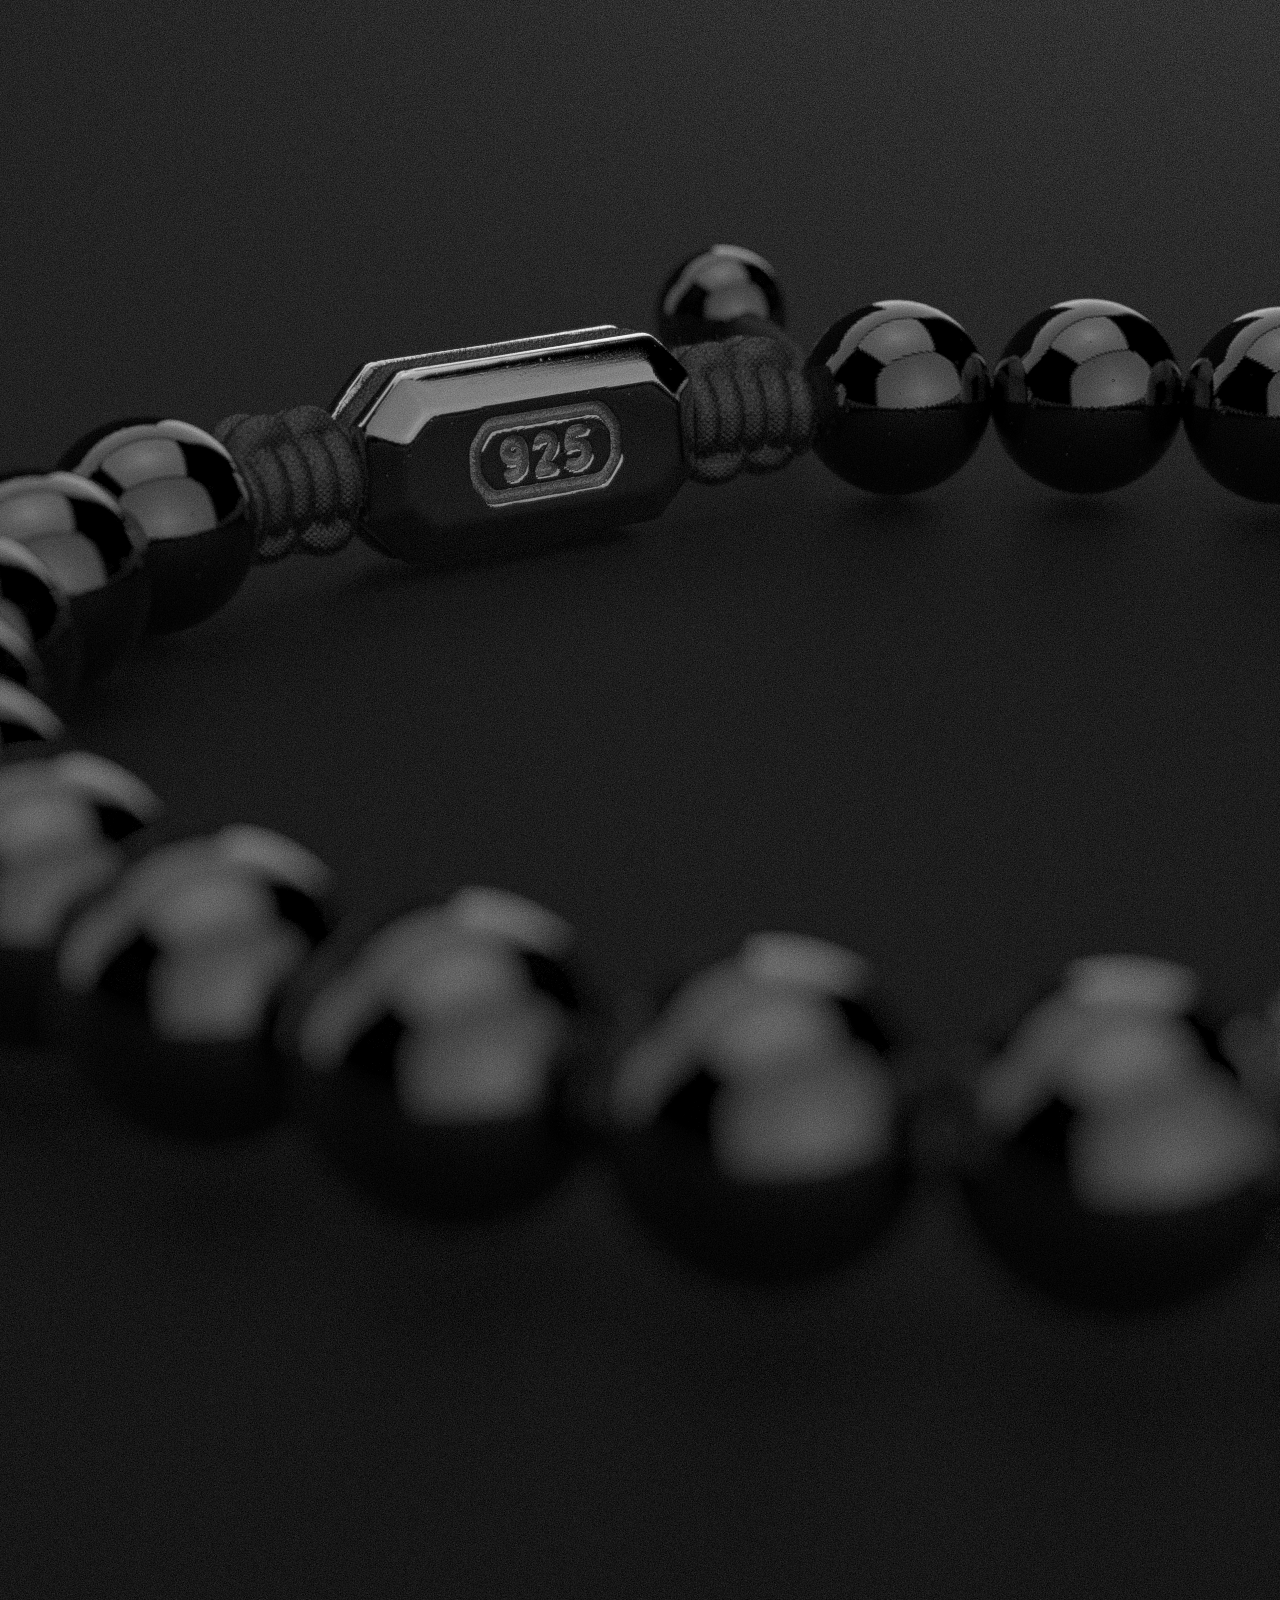 Bracelet Onyx 8mm | Géométrie